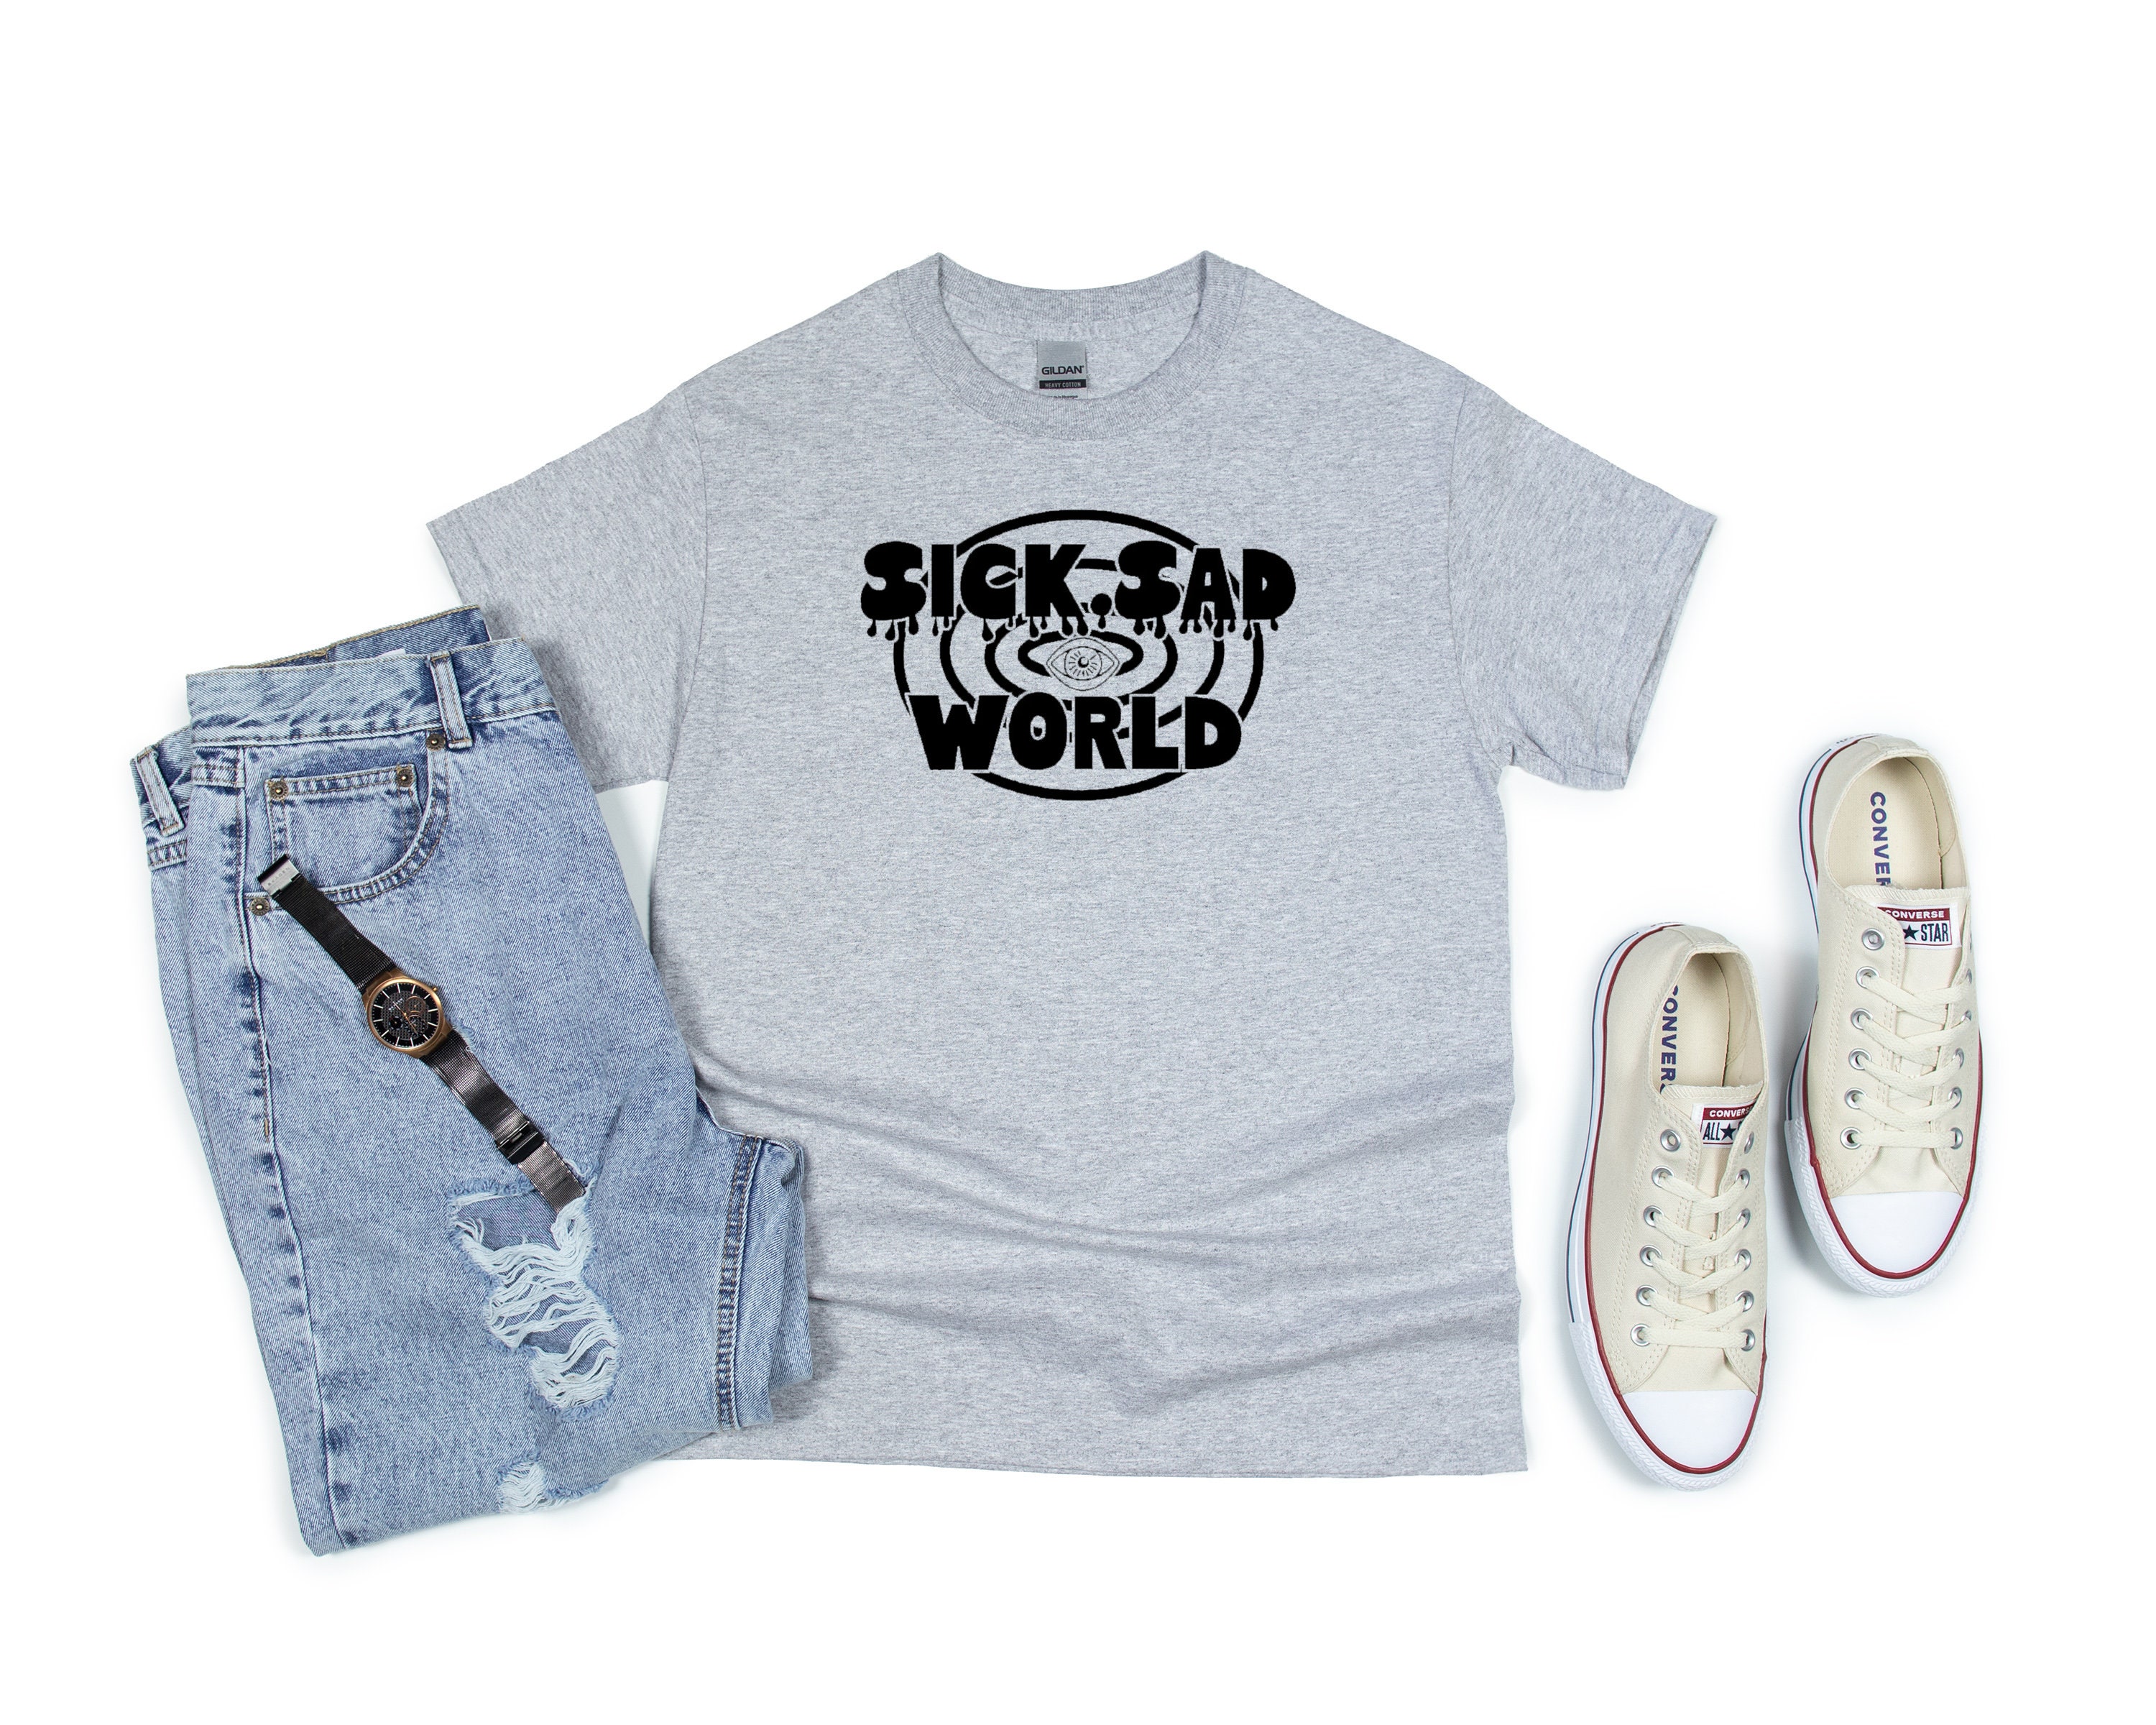 Sick Sad World Daria Morgendorffer 90’s Nostalgia Grunge Popular Unisex T-Shirt